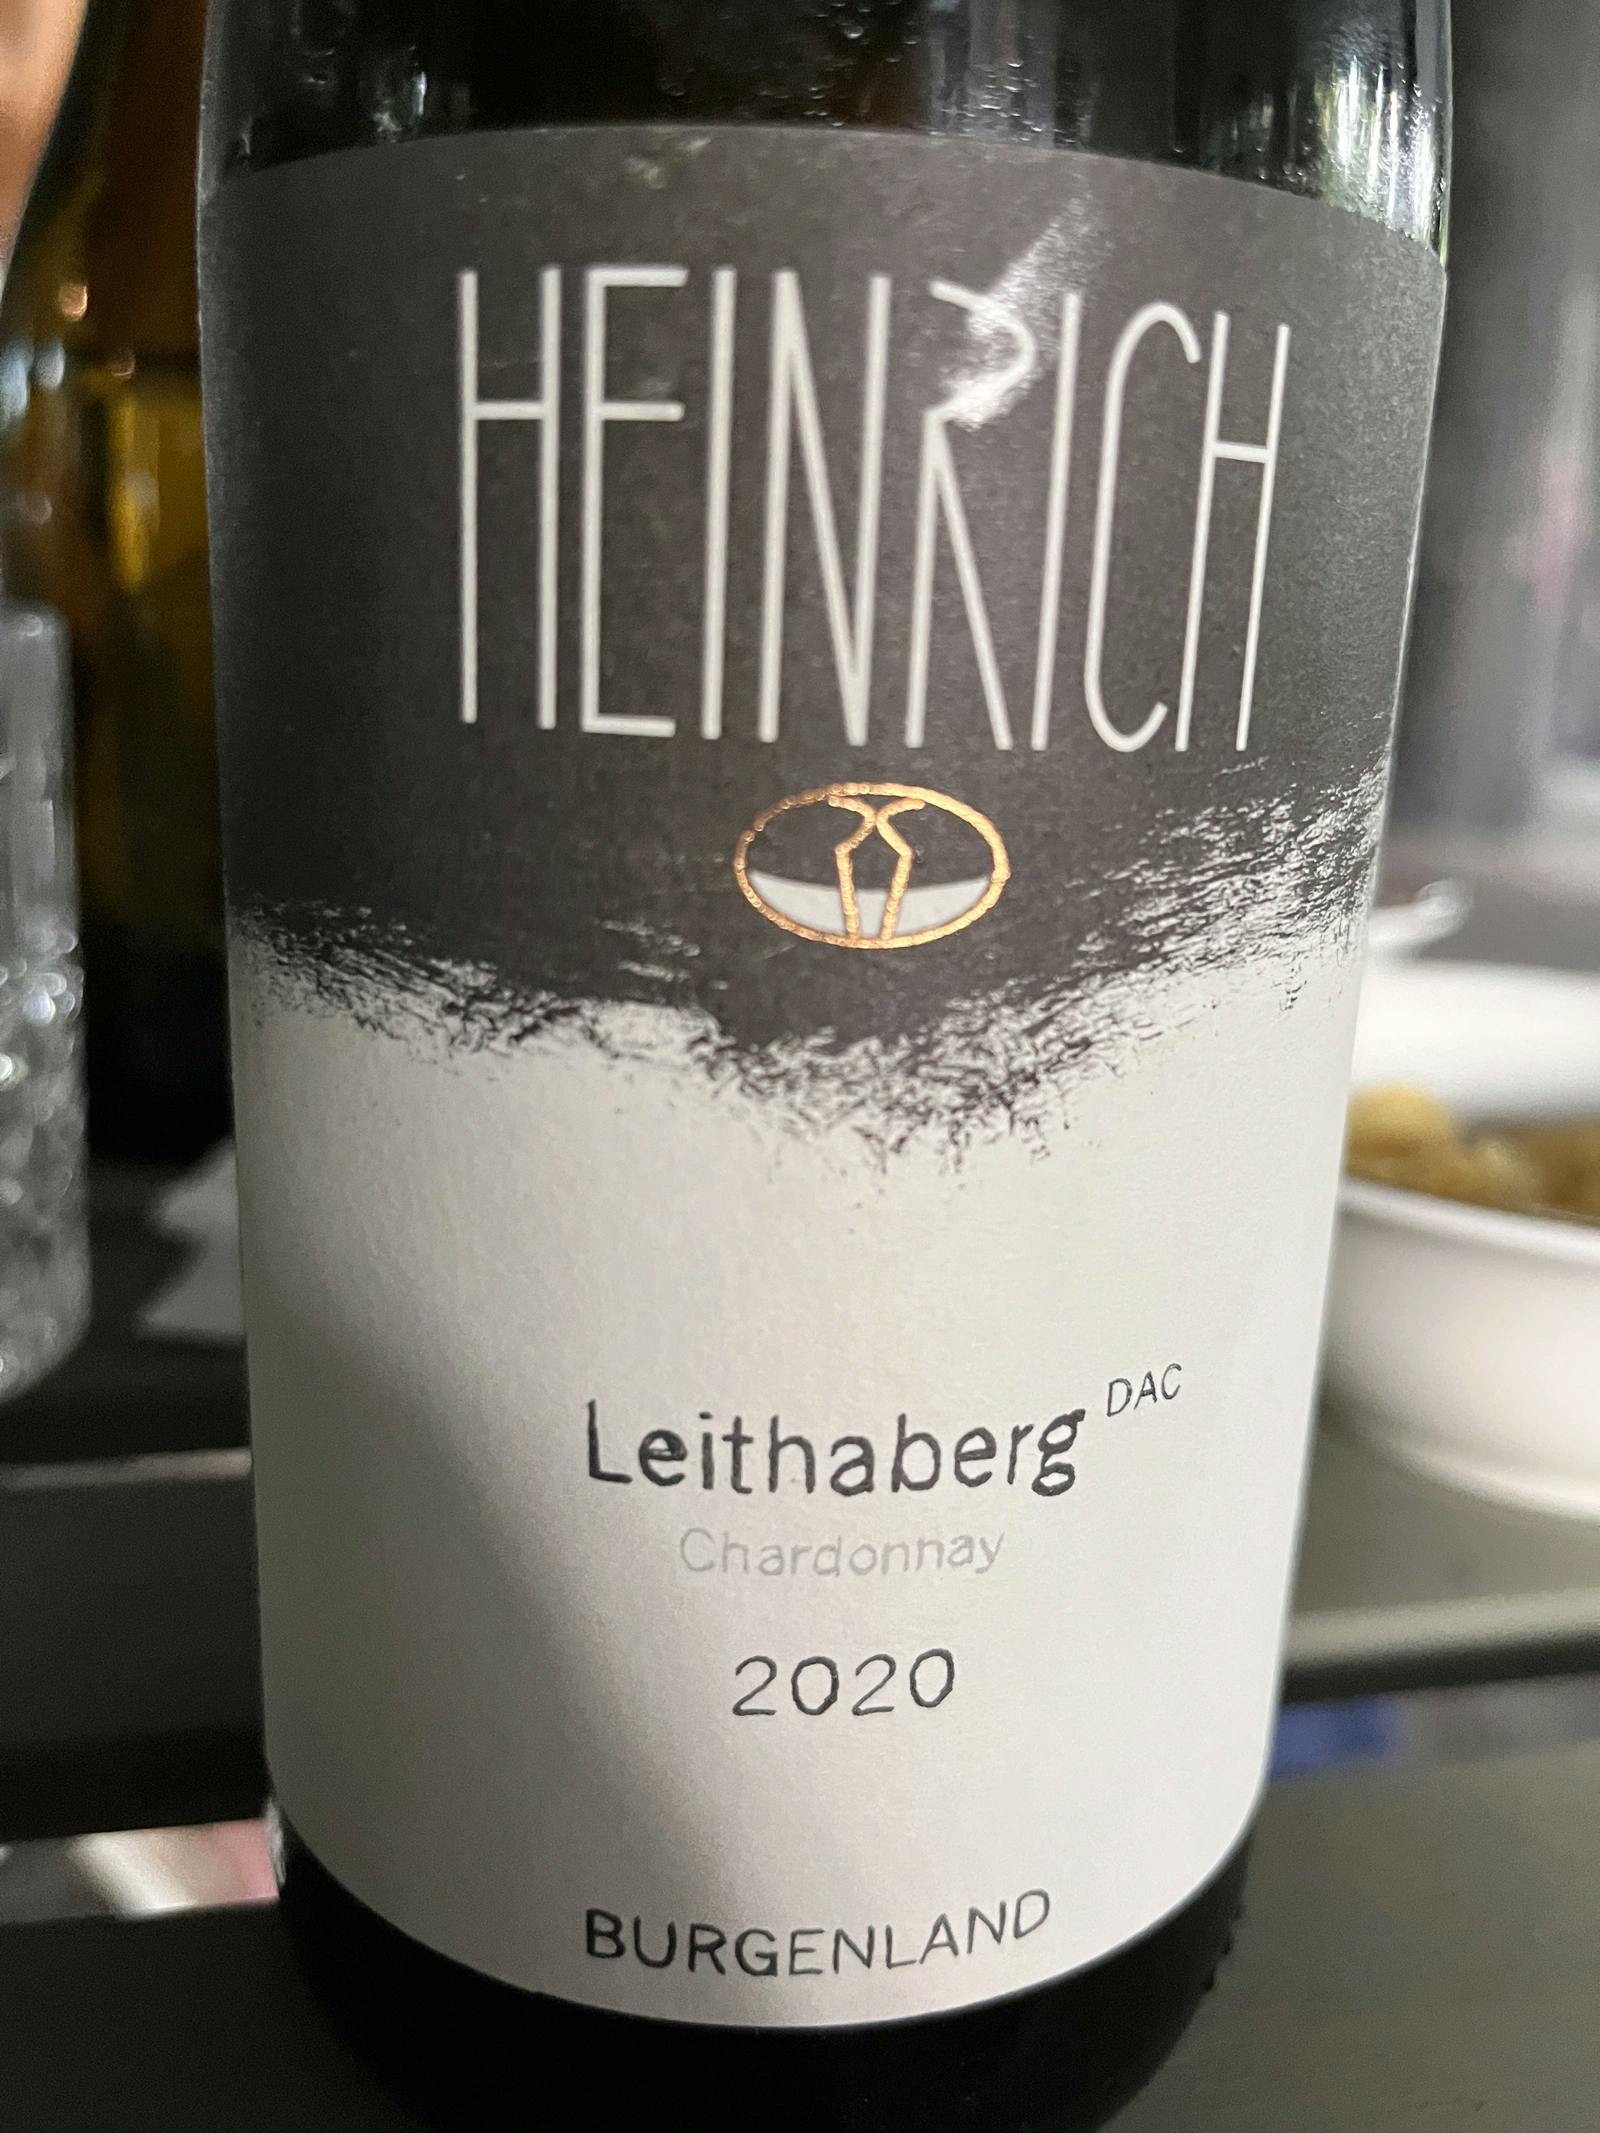 Heinrich Leithaberg Chardonnay 2020